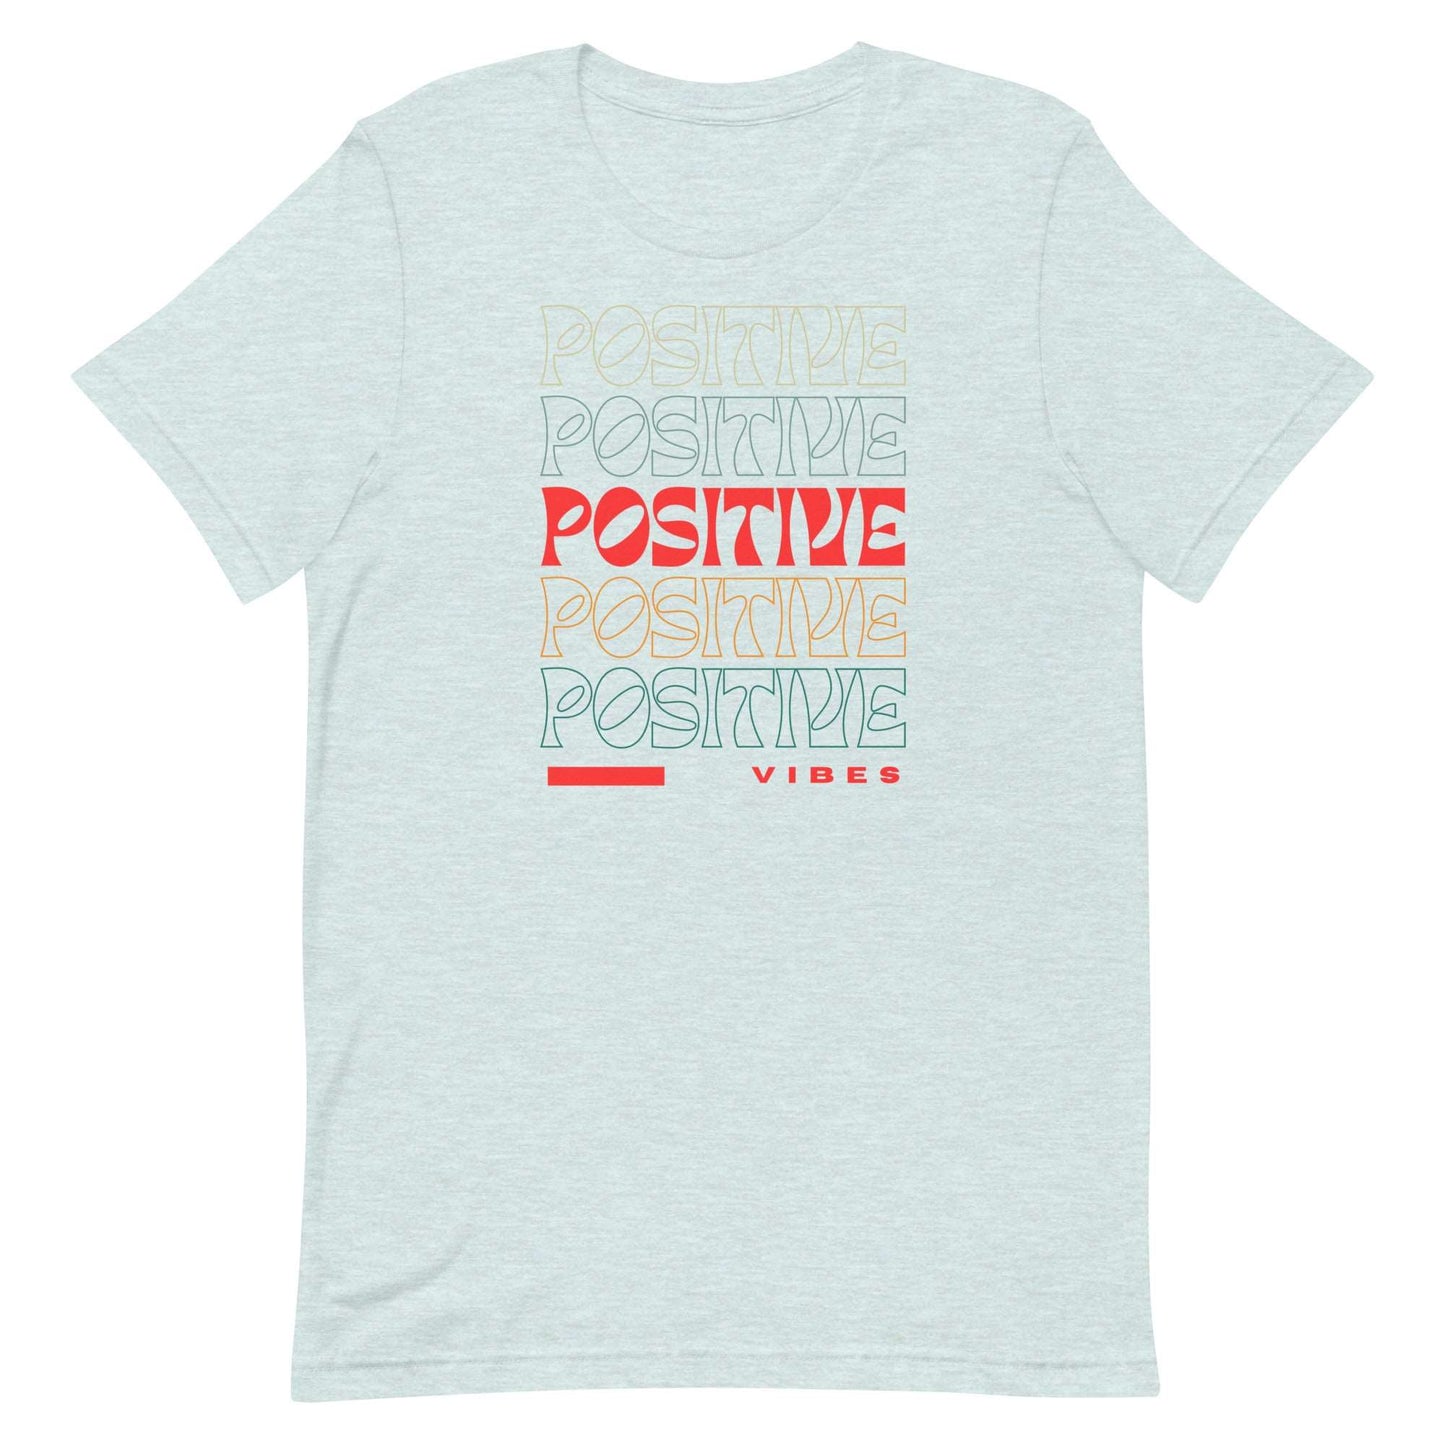 Positive Vibes. T-shirt